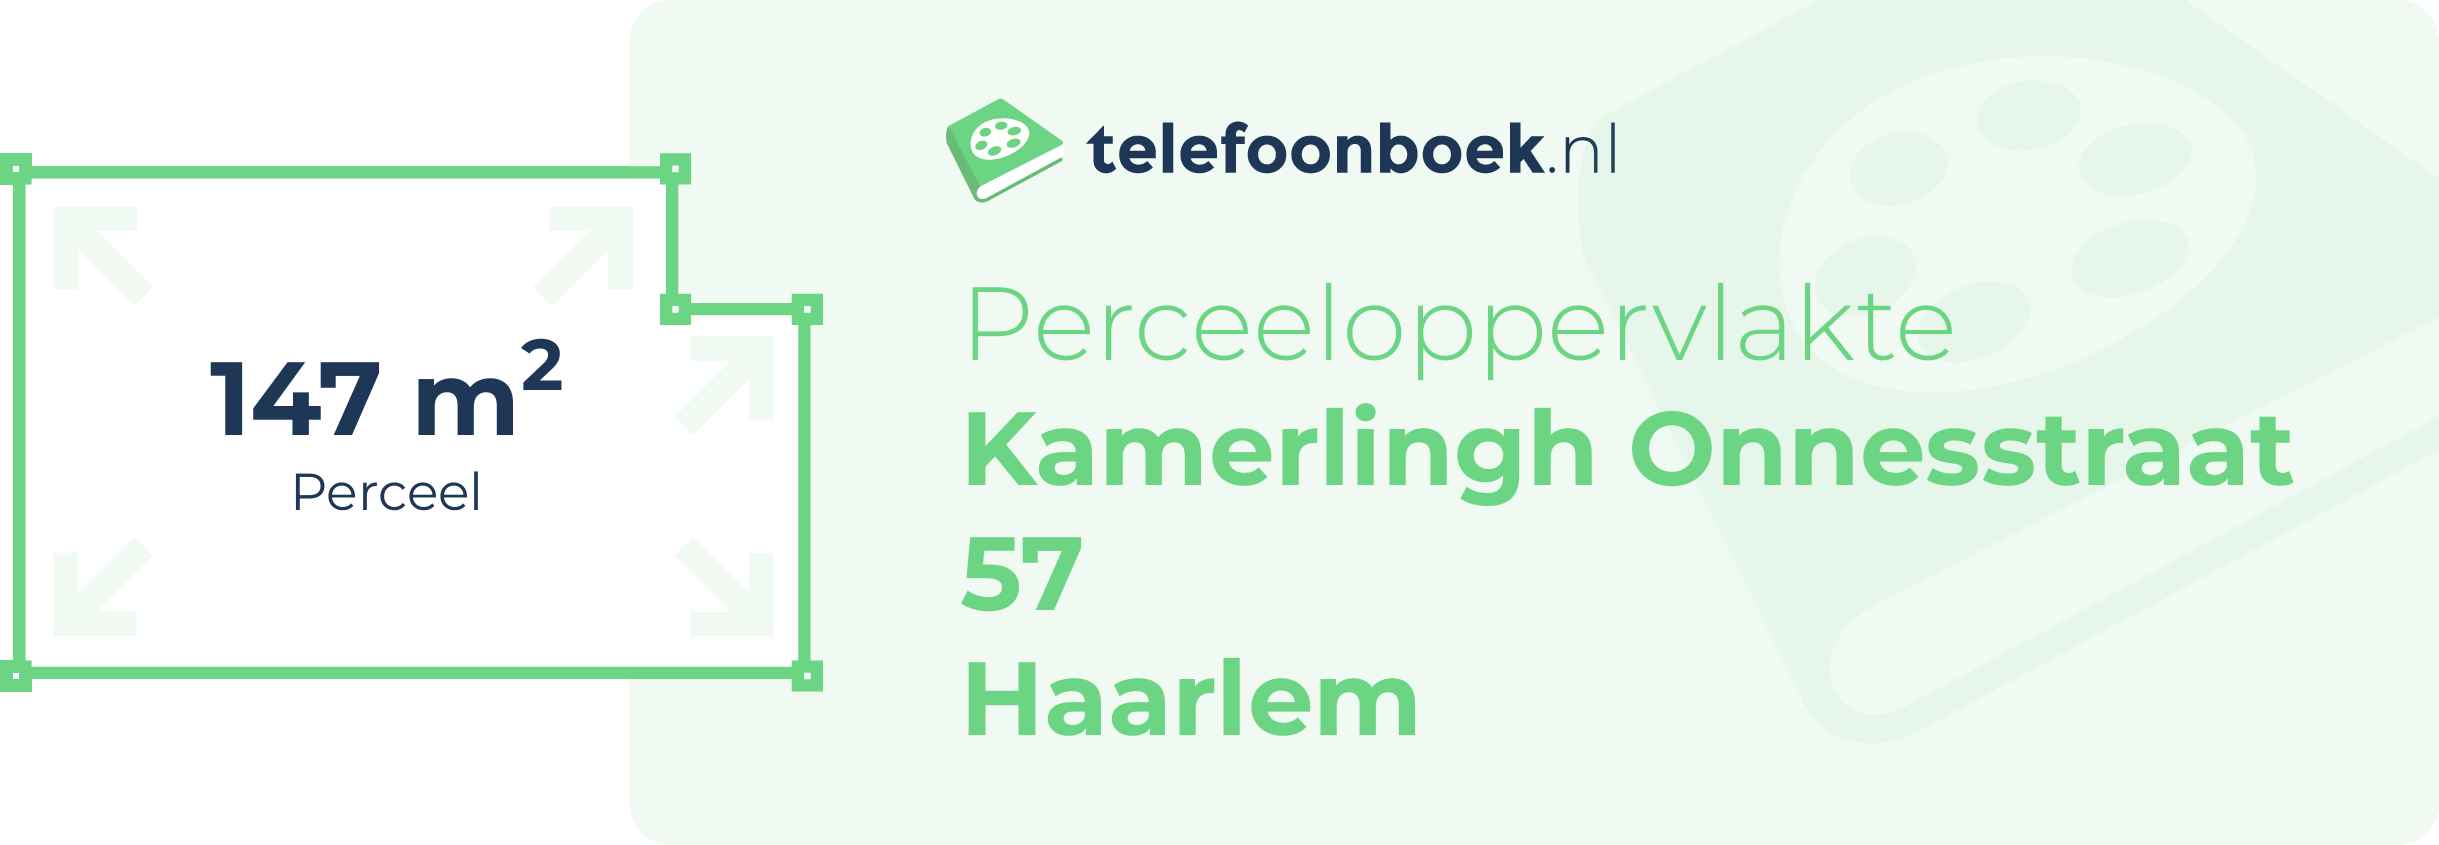 Perceeloppervlakte Kamerlingh Onnesstraat 57 Haarlem